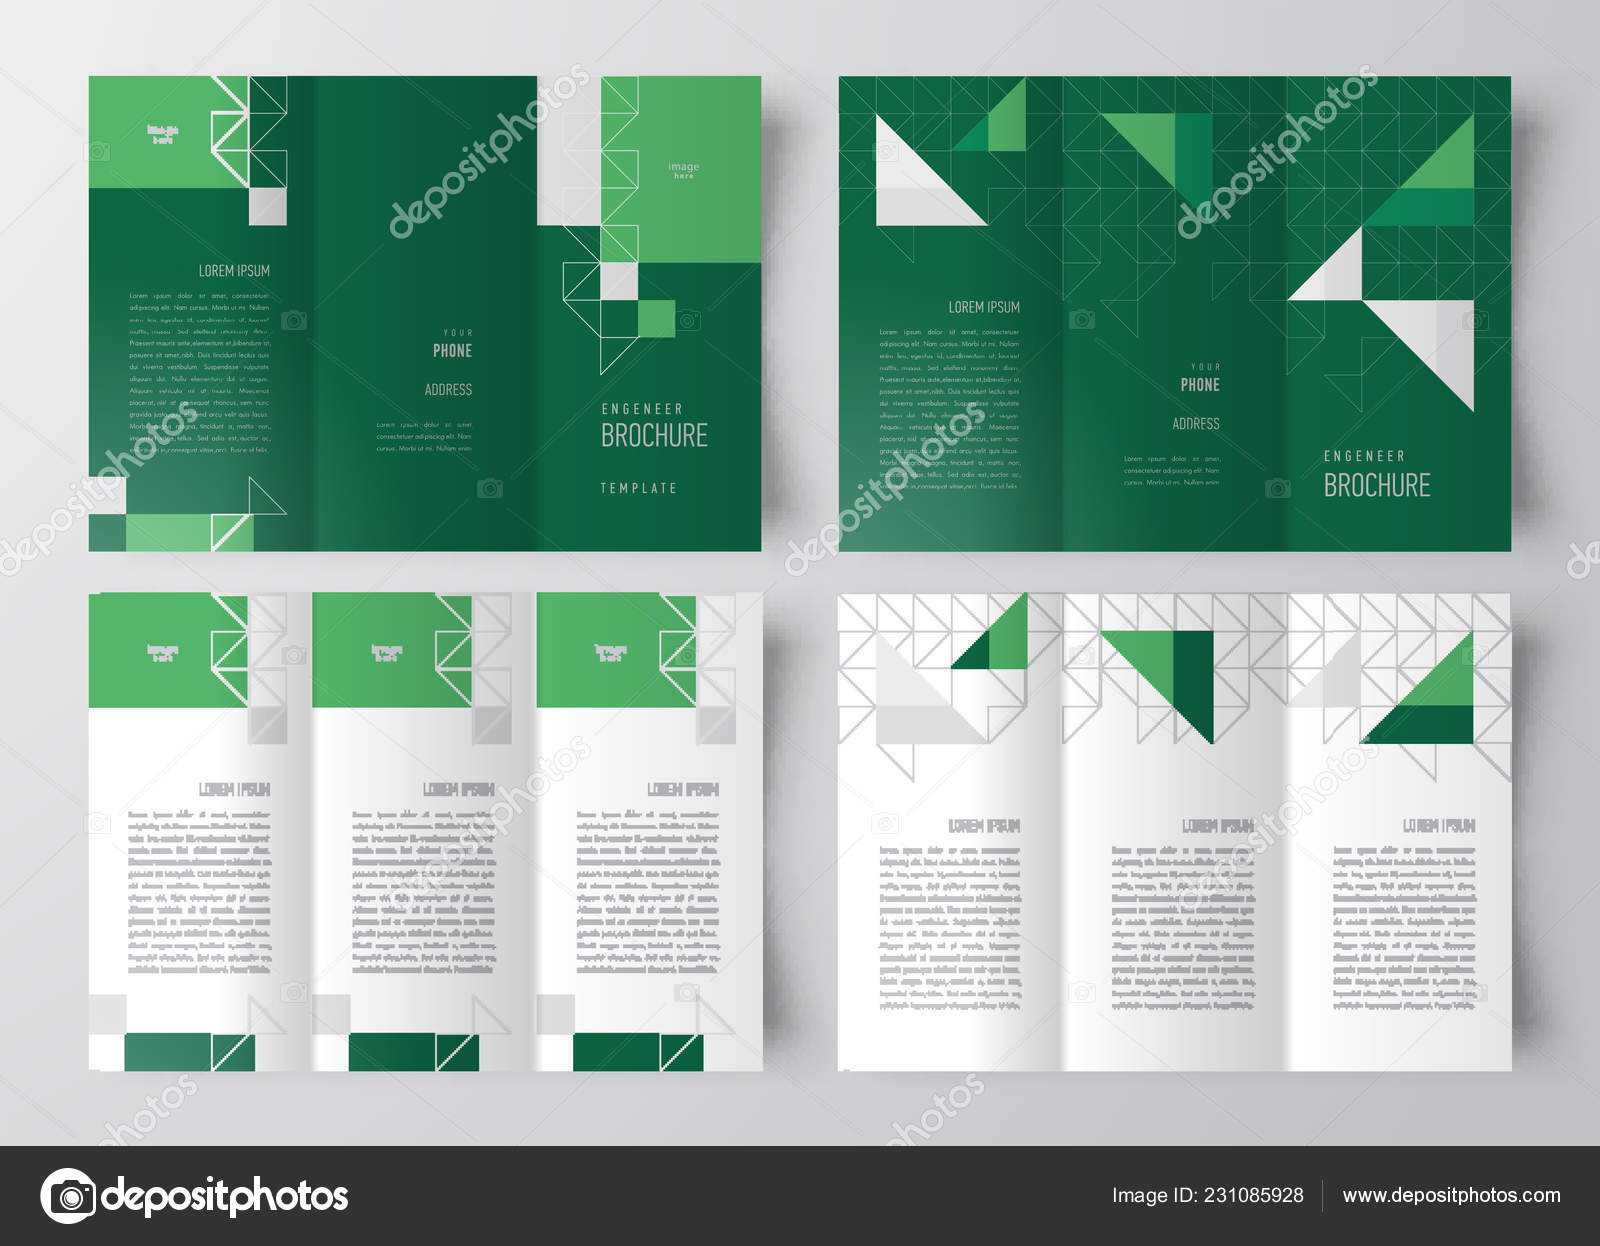 Brochure Design Template Engineering Abstract Triangles With Engineering Brochure Templates